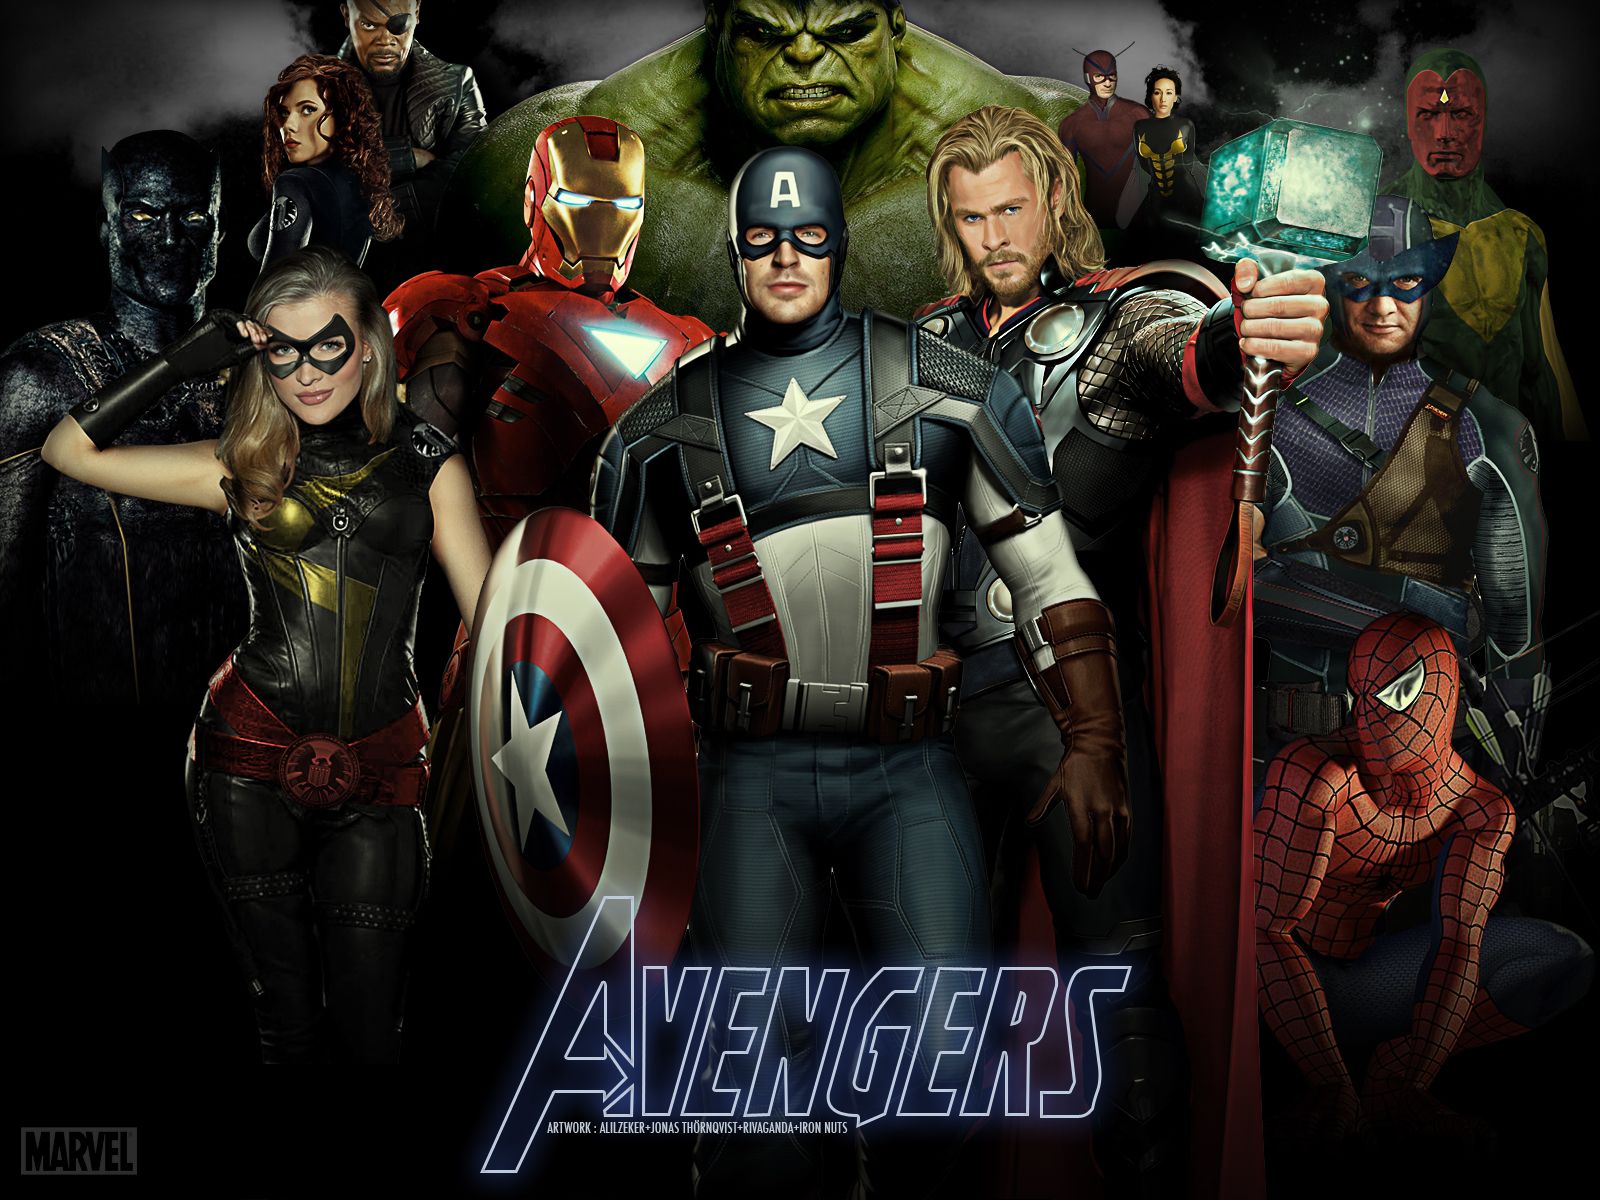 All avengers - Marvel Comics Wallpaper (25389349) - Fanpop